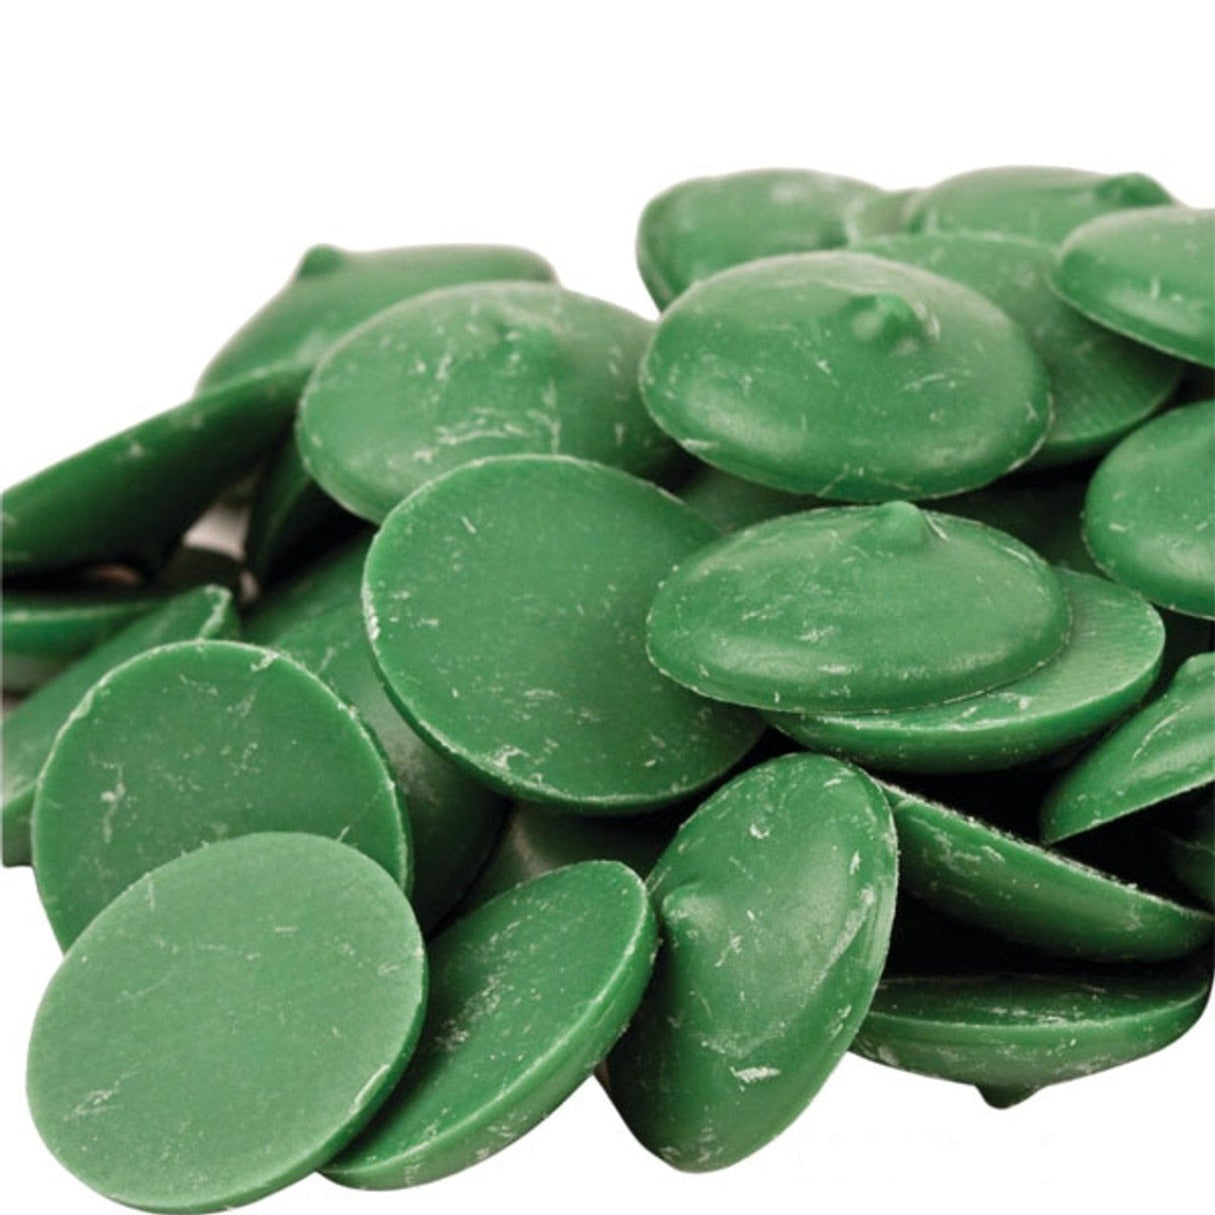 Clasen Alpine Dark Green Candy Melting Wafers Box - 25lb